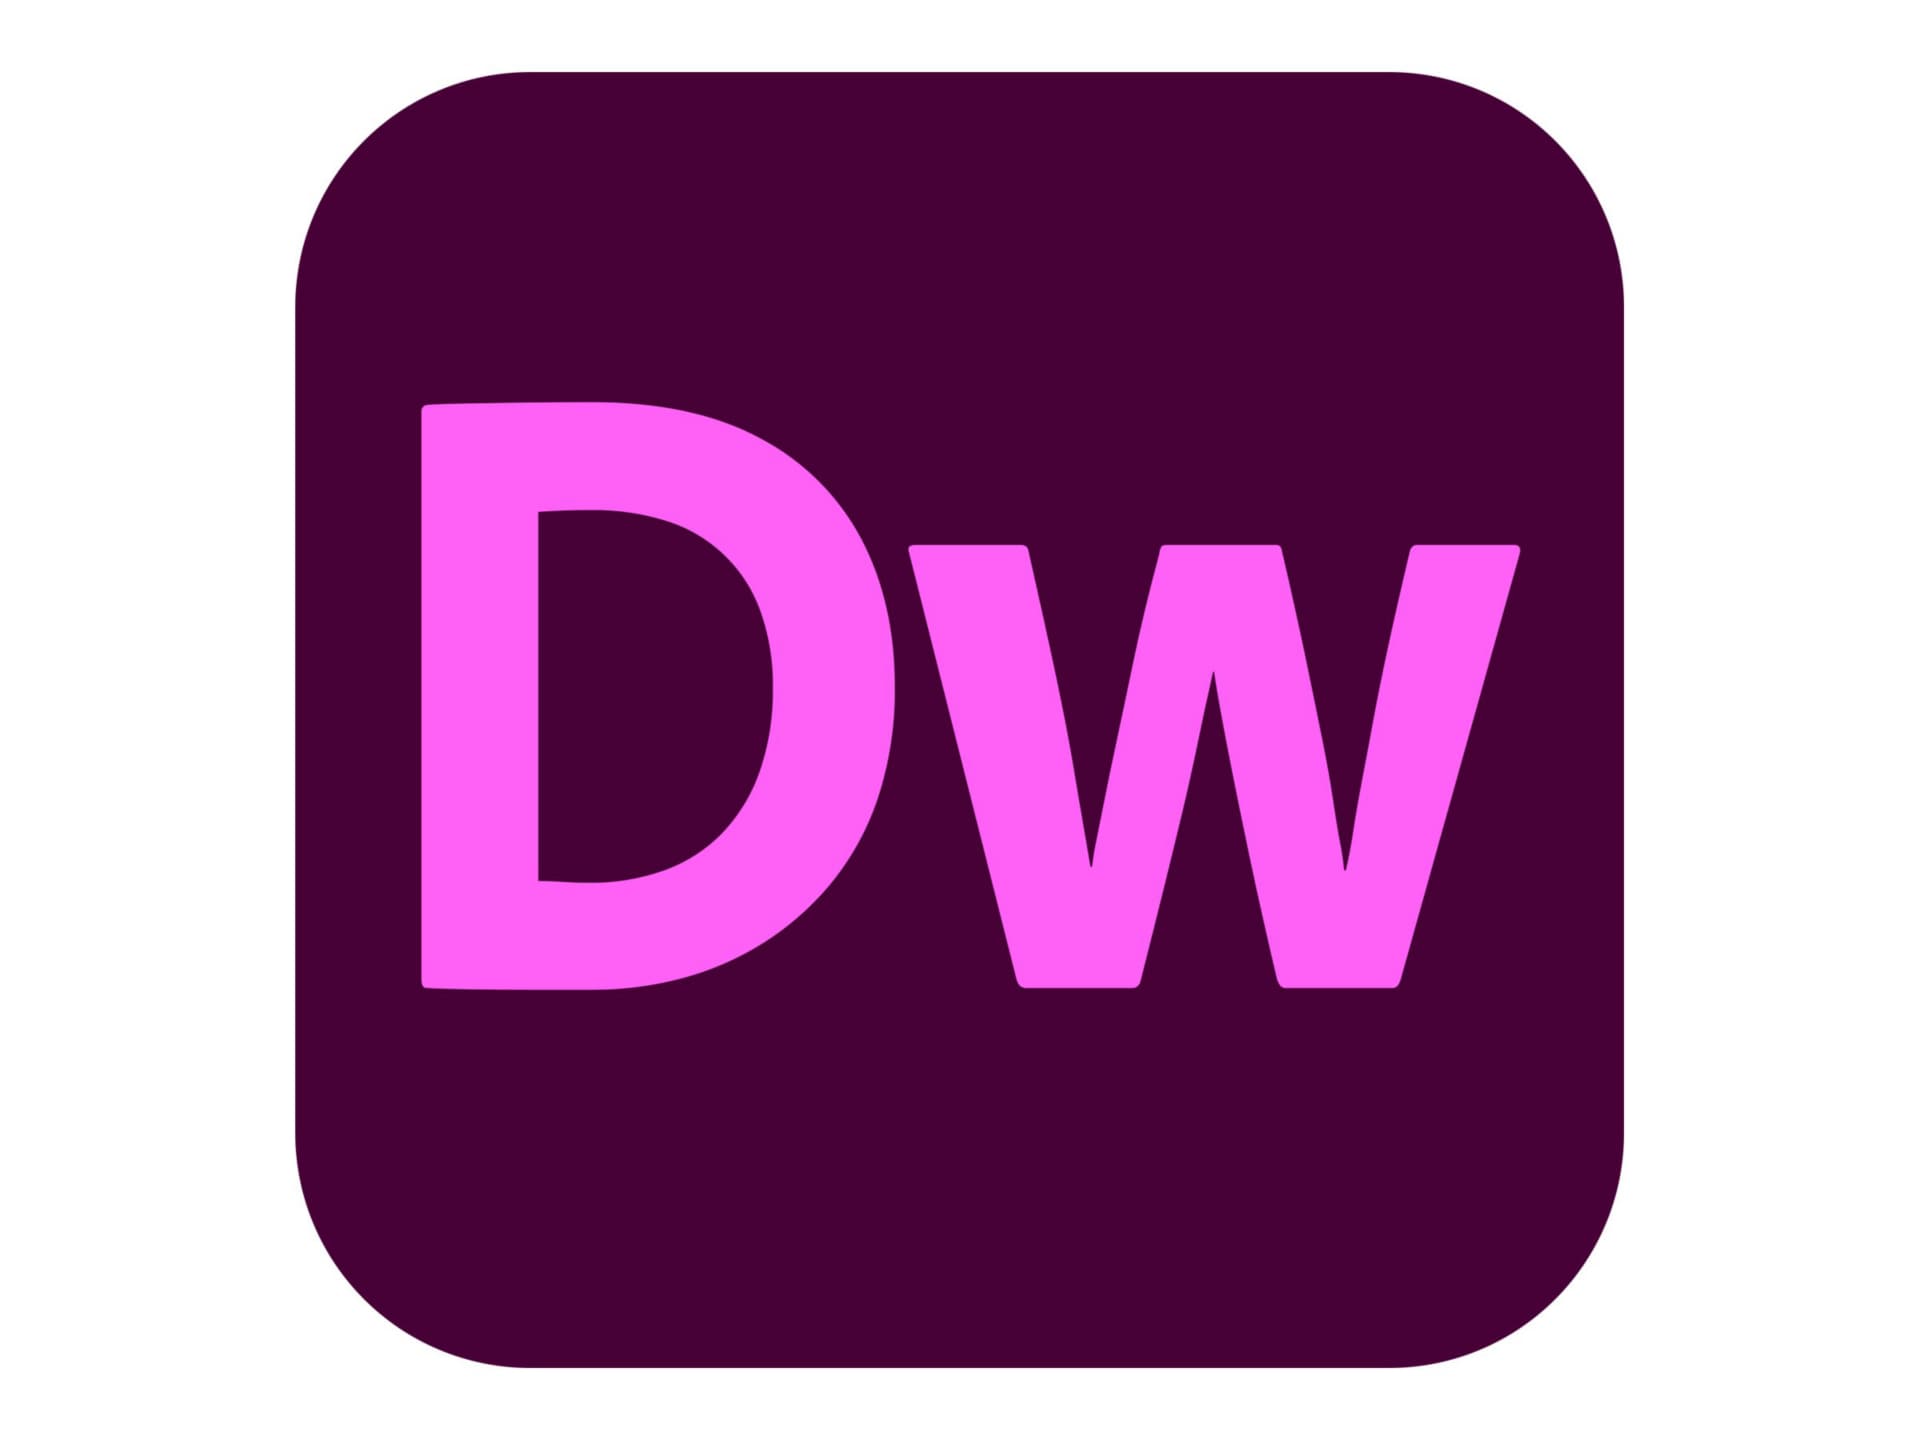 Adobe Dreamweaver for teams - Subscription New (annual) - 1 user